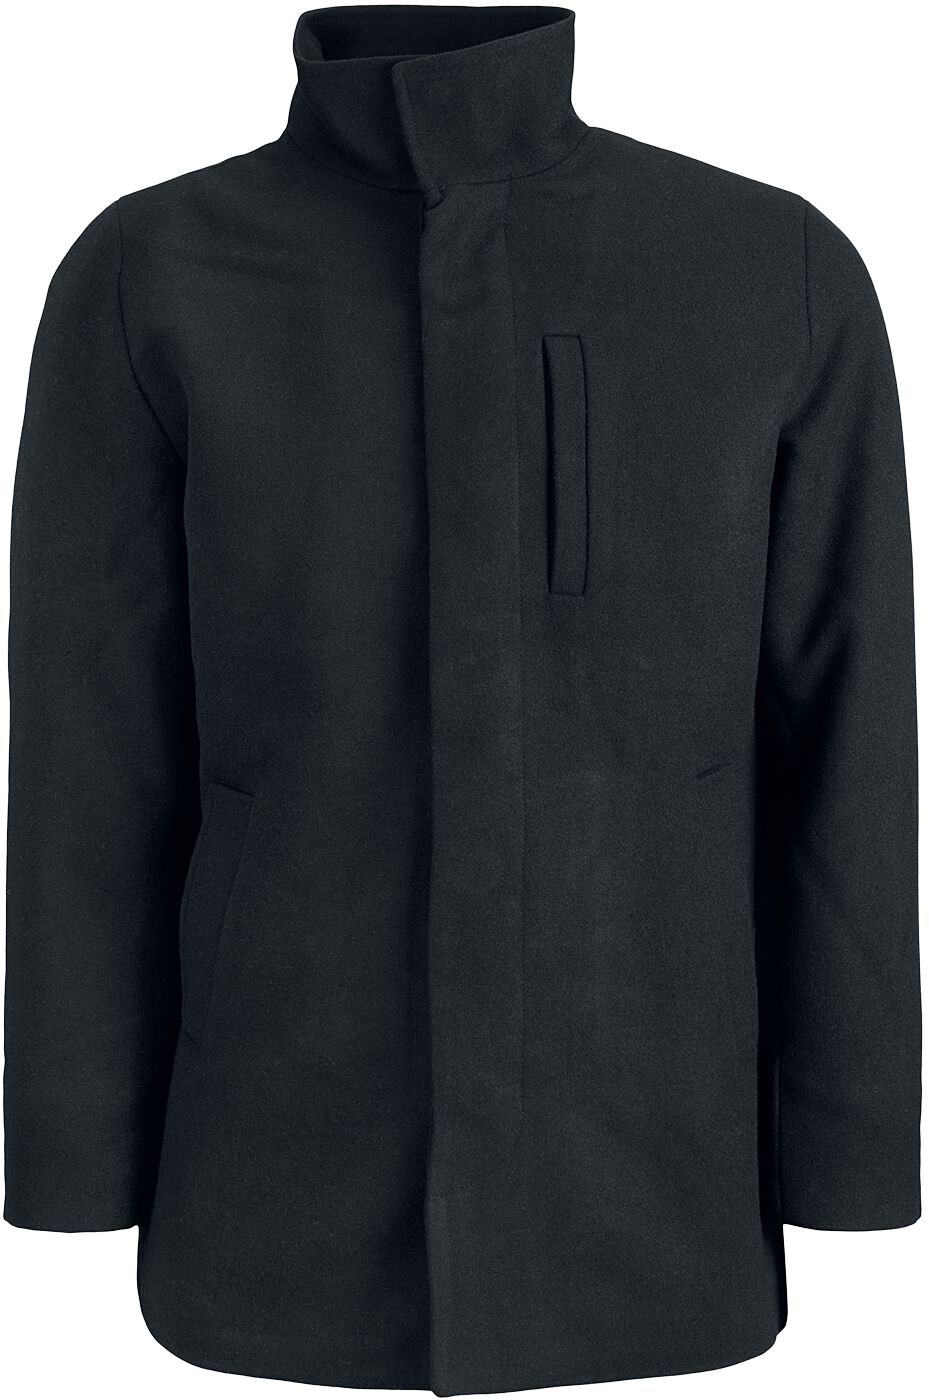 jack & jones dunham wool jacket winter jacket black